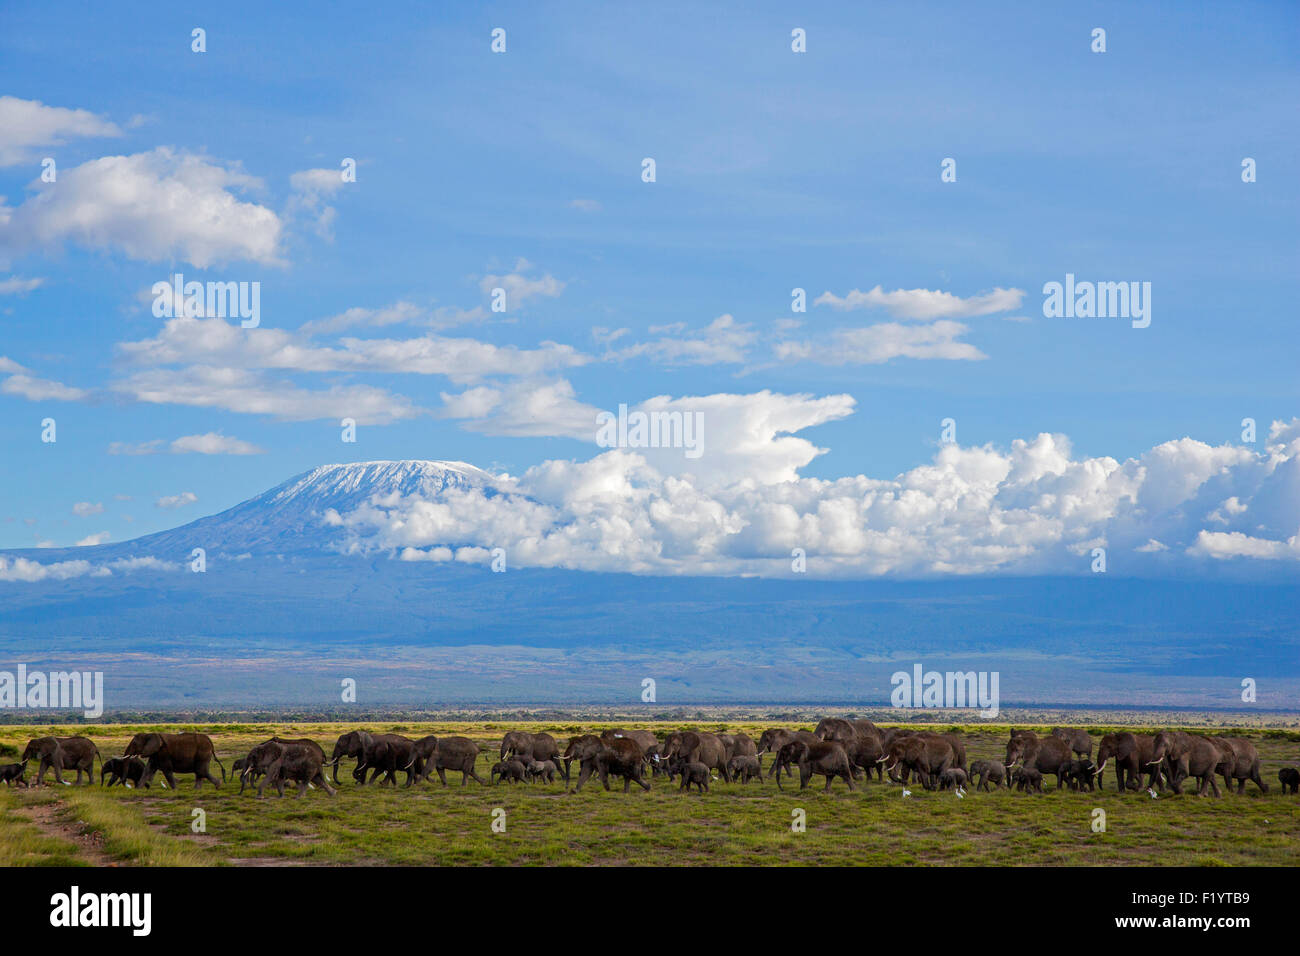 African Elephant (Loxodonta africana) Wandering herd at Amboseli National Park Kenya against Kilimandjaro Stock Photo